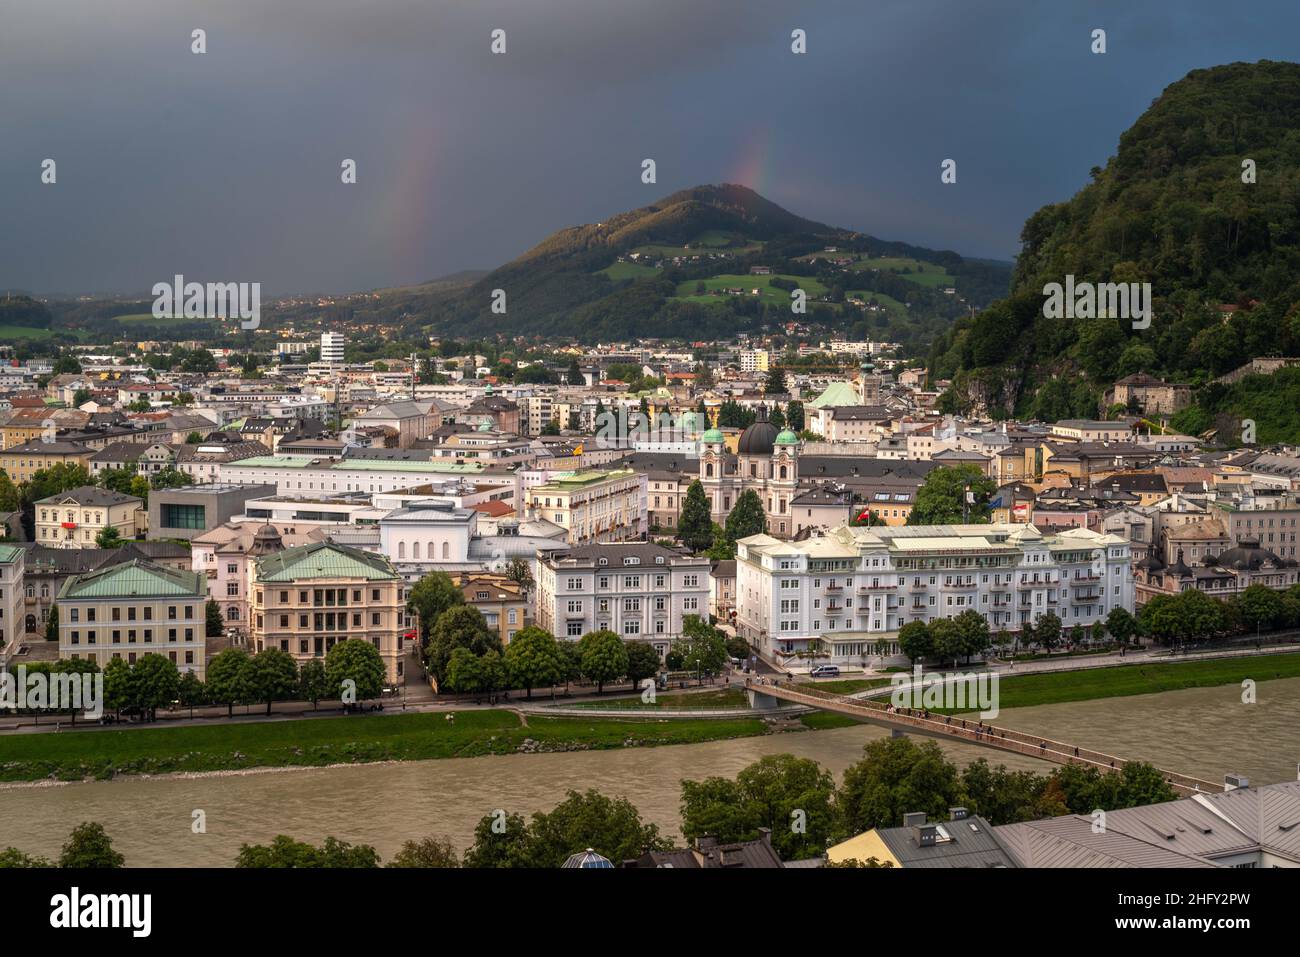 Salisburgo im Spätsommer, Stadtansichten Foto Stock